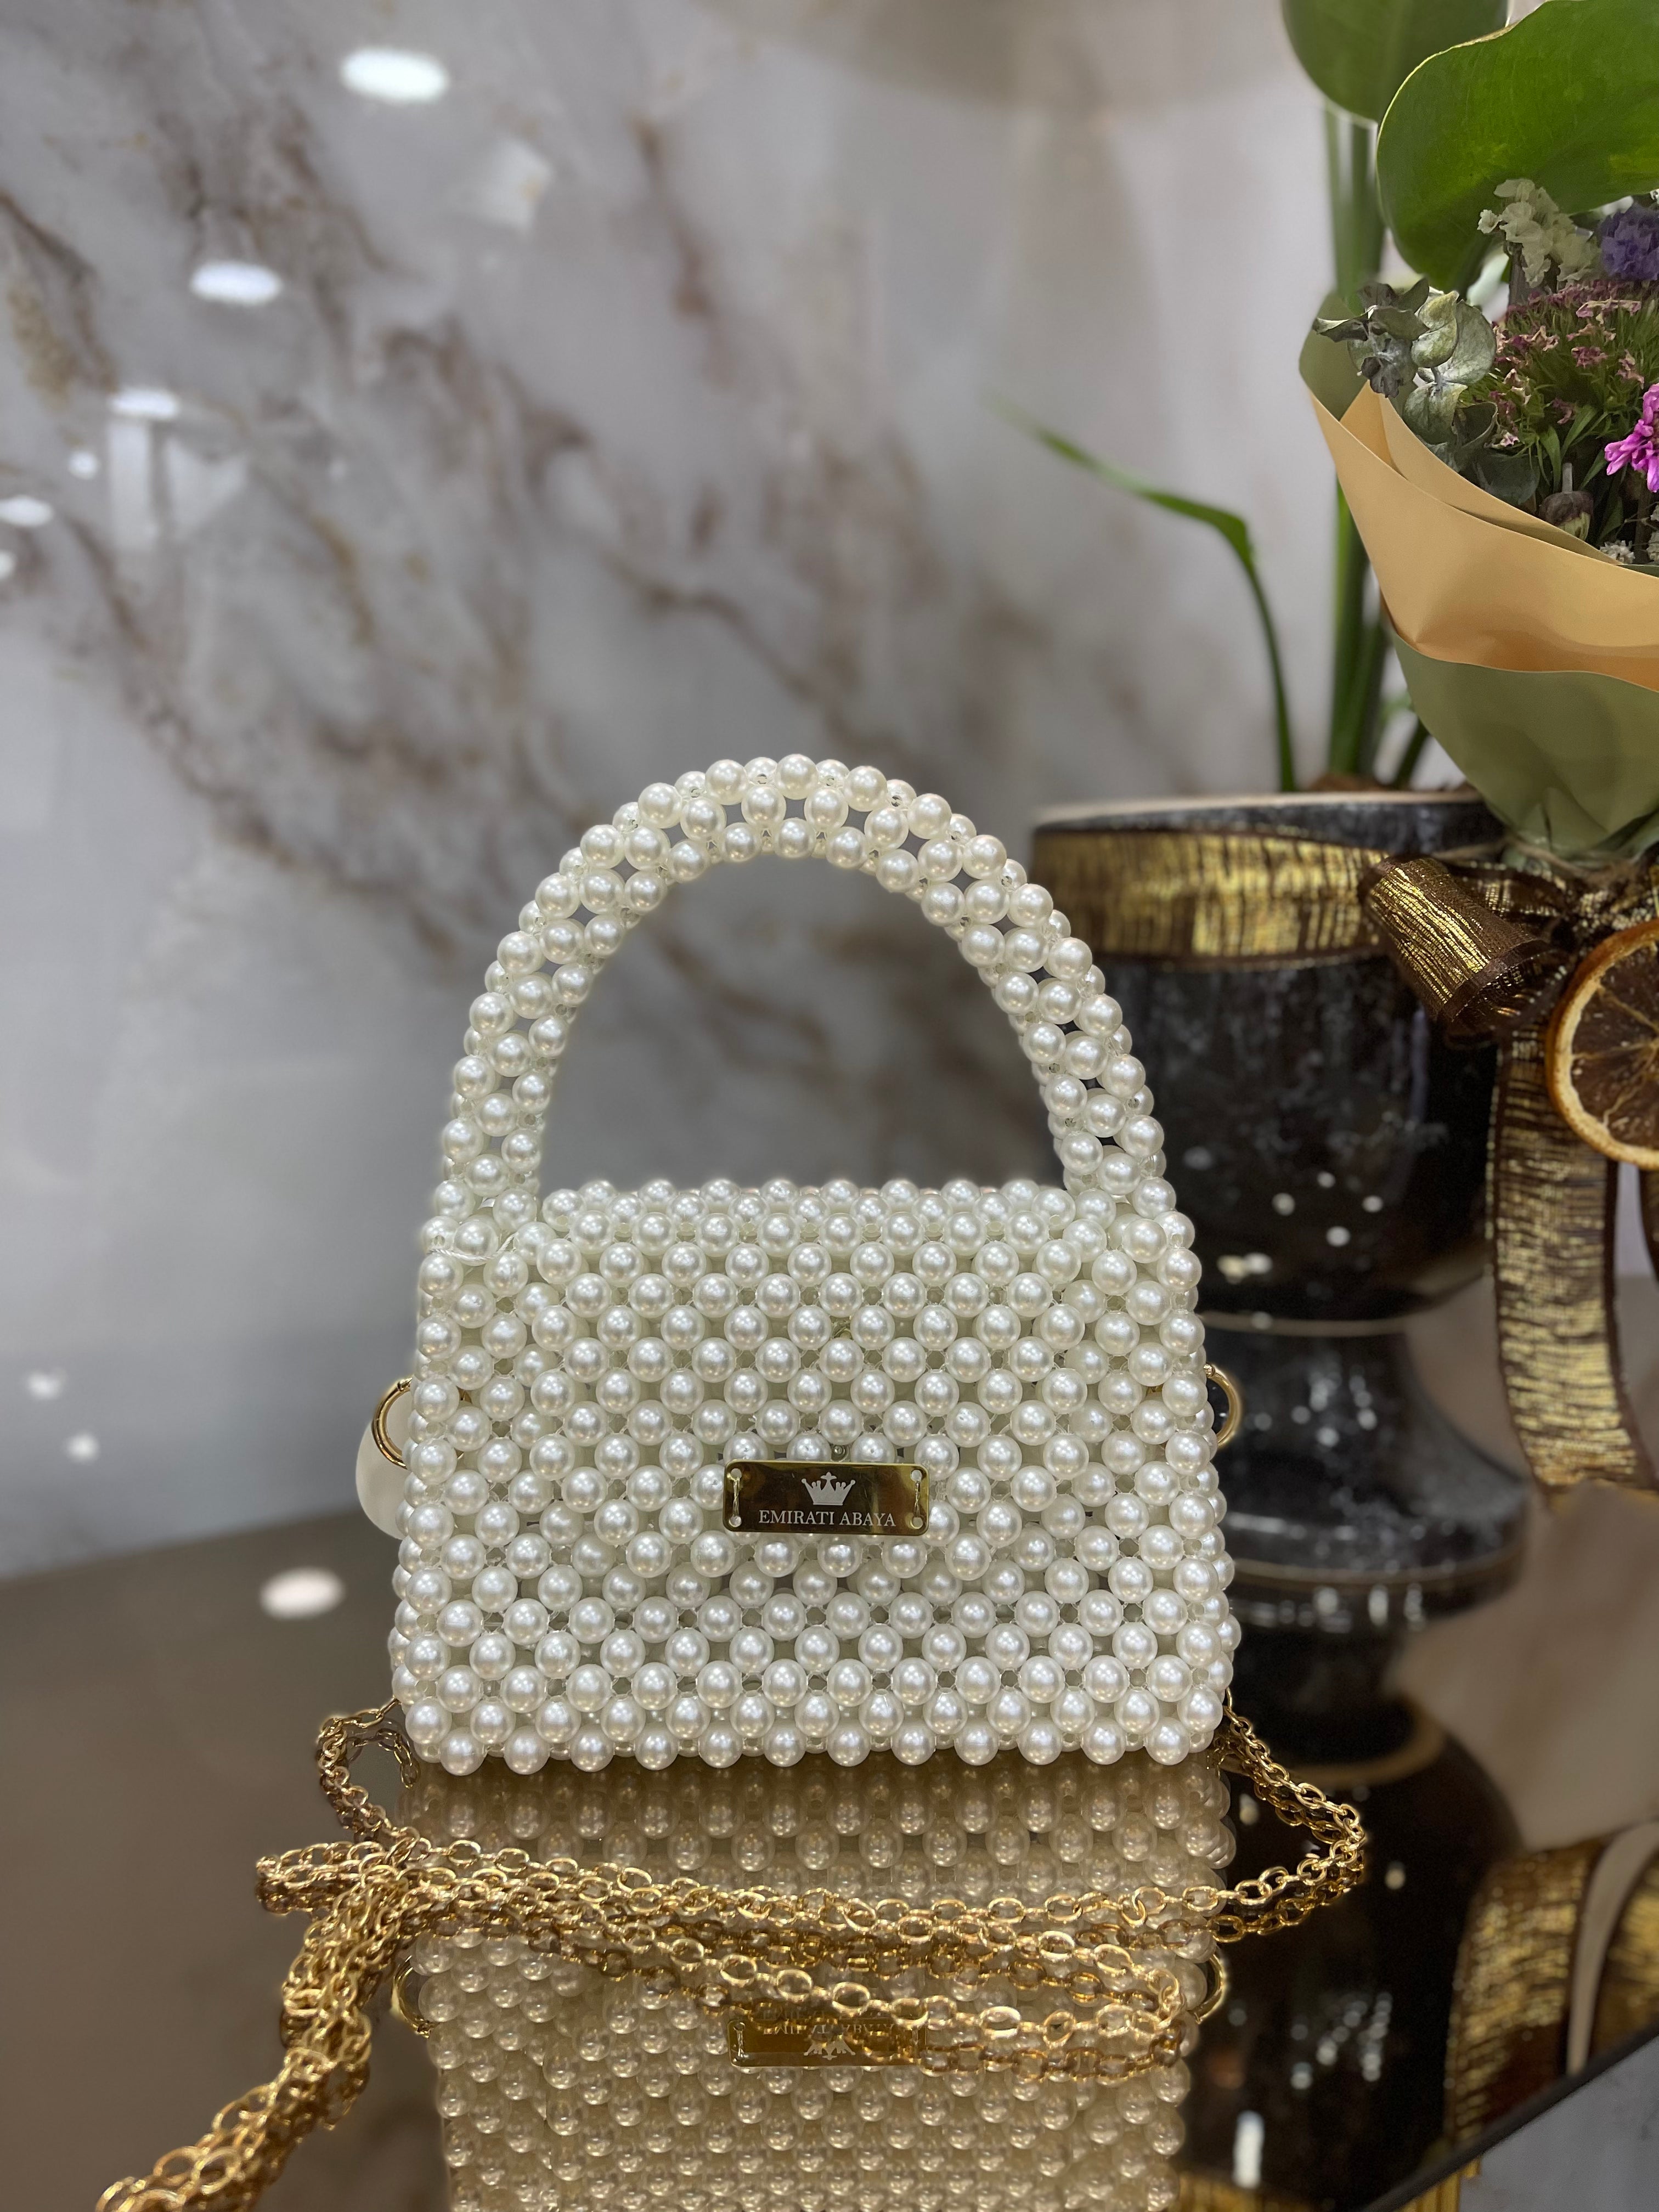 White pearl handmade bag